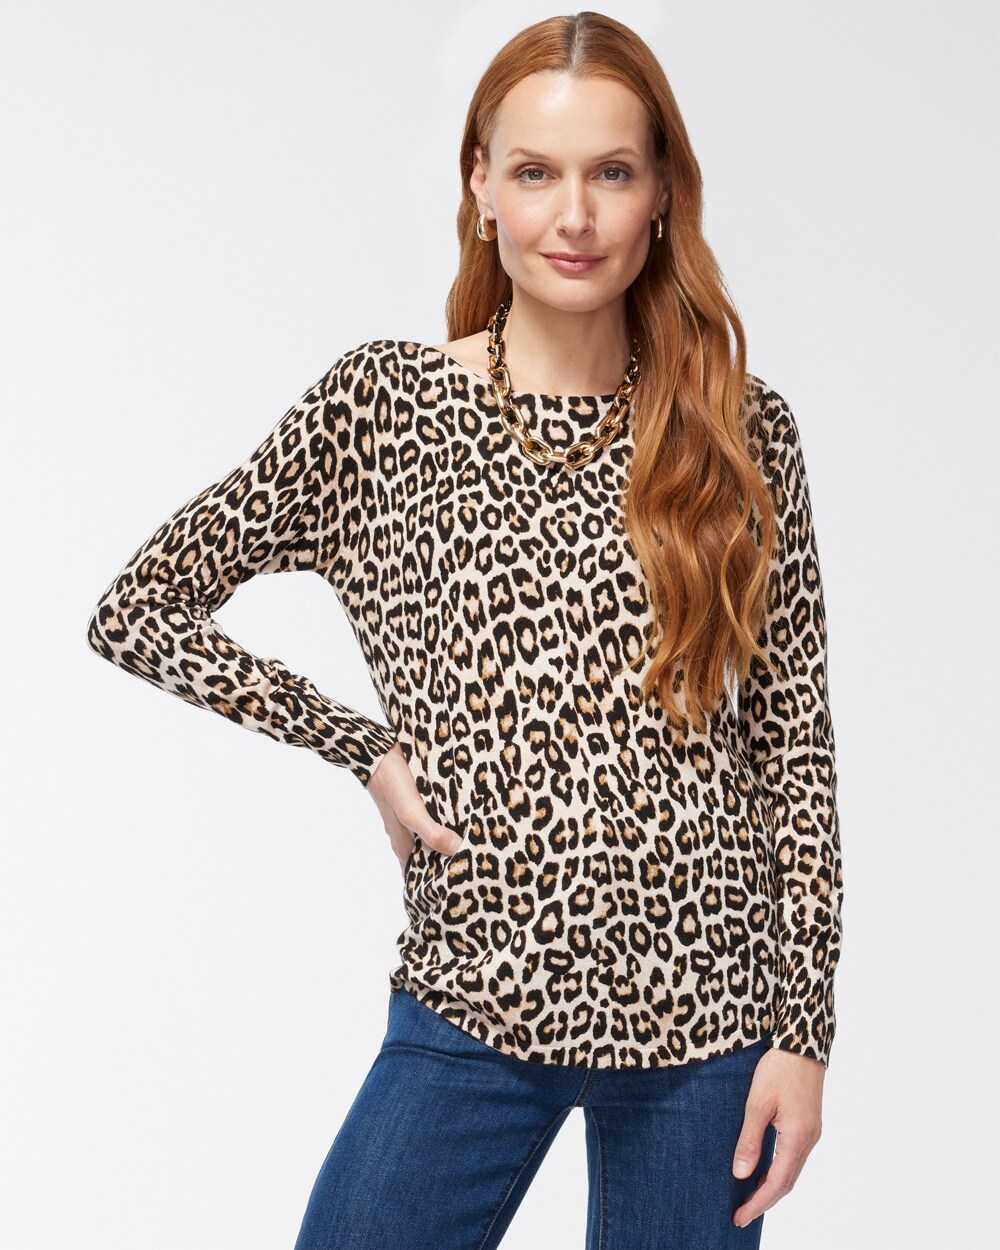 Spun Rayon Leopard Printed Pullover